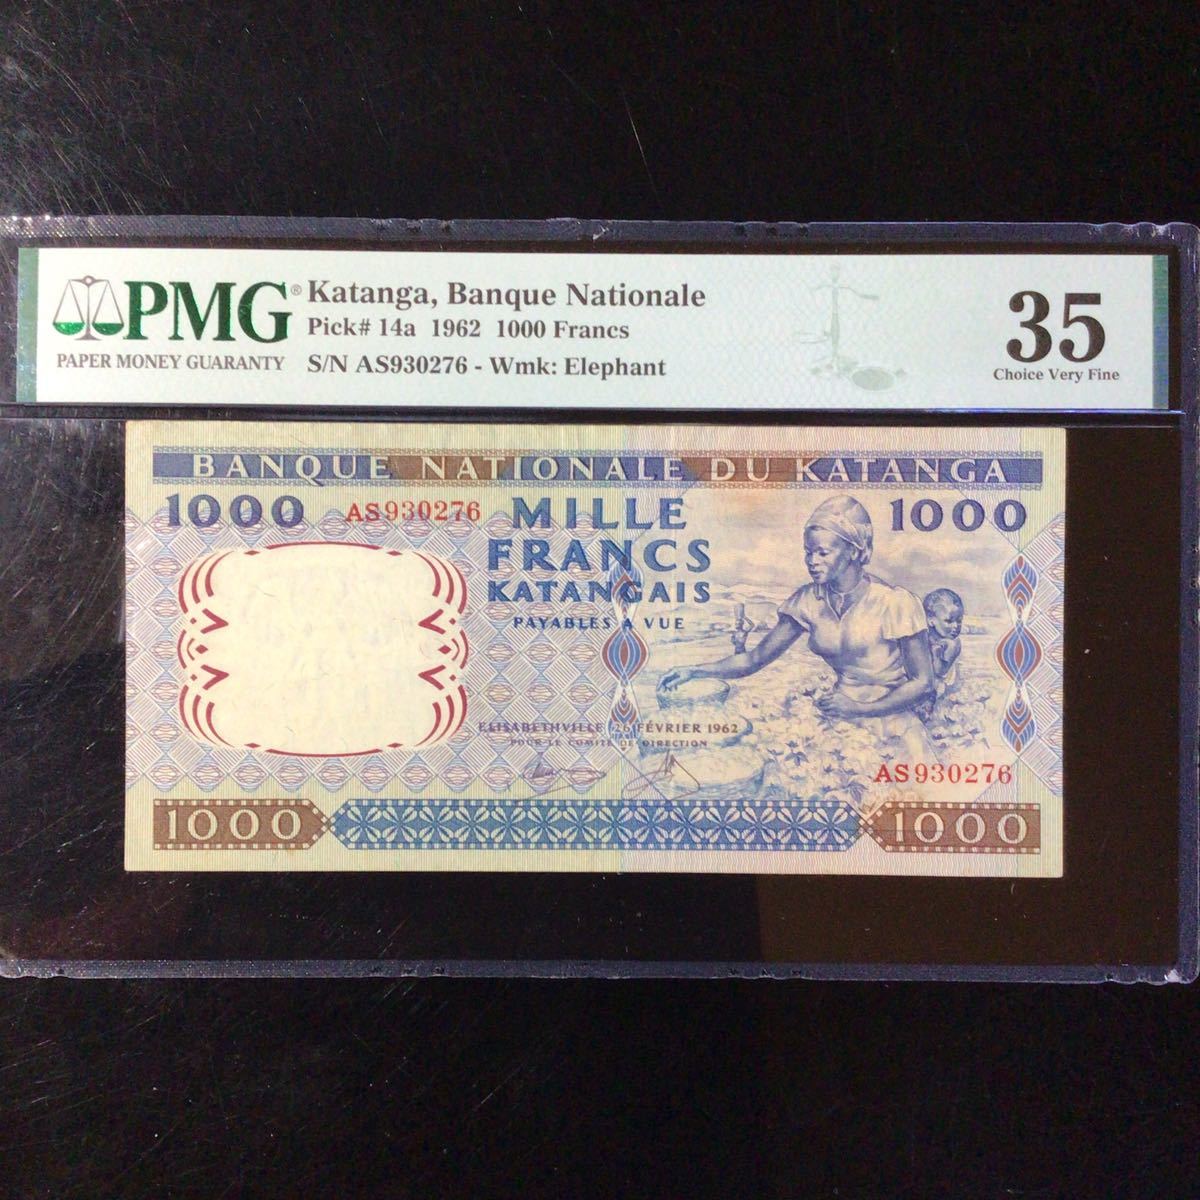 World Banknote Grading KATANGA《Banque Nationale》1000 Francs【1962】『PMG Grading Choice Very Fine 35』